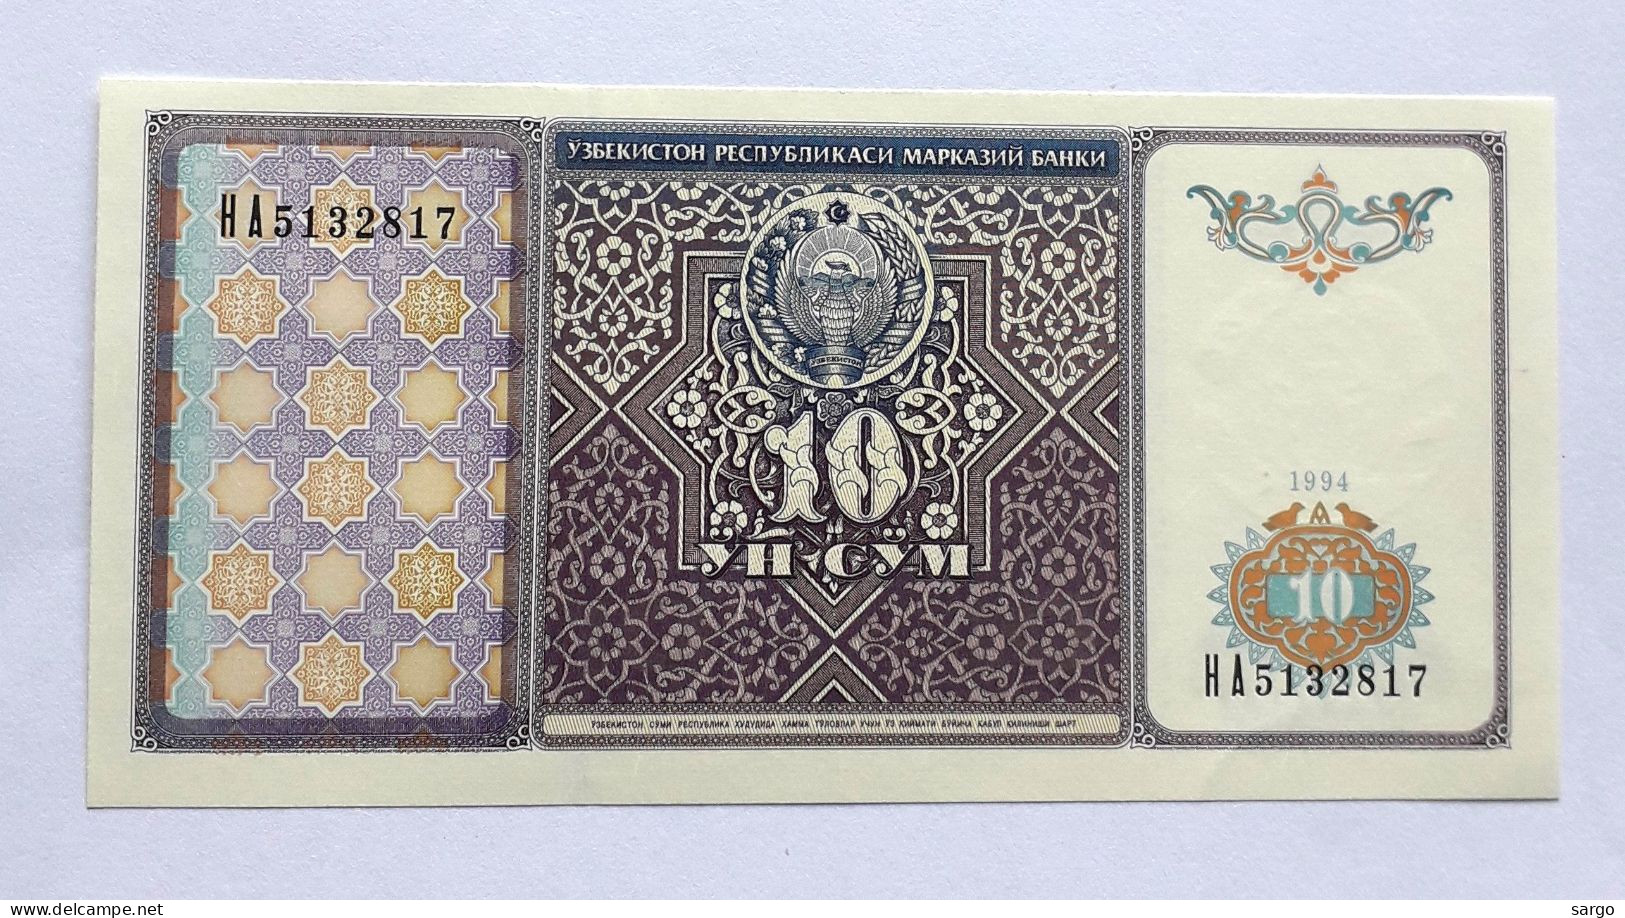 UZBEKISTAN  - 10 SO'M - P 76  (1994) - UNC - BANKNOTES - PAPER MONEY - CARTAMONETA - - Uzbekistan